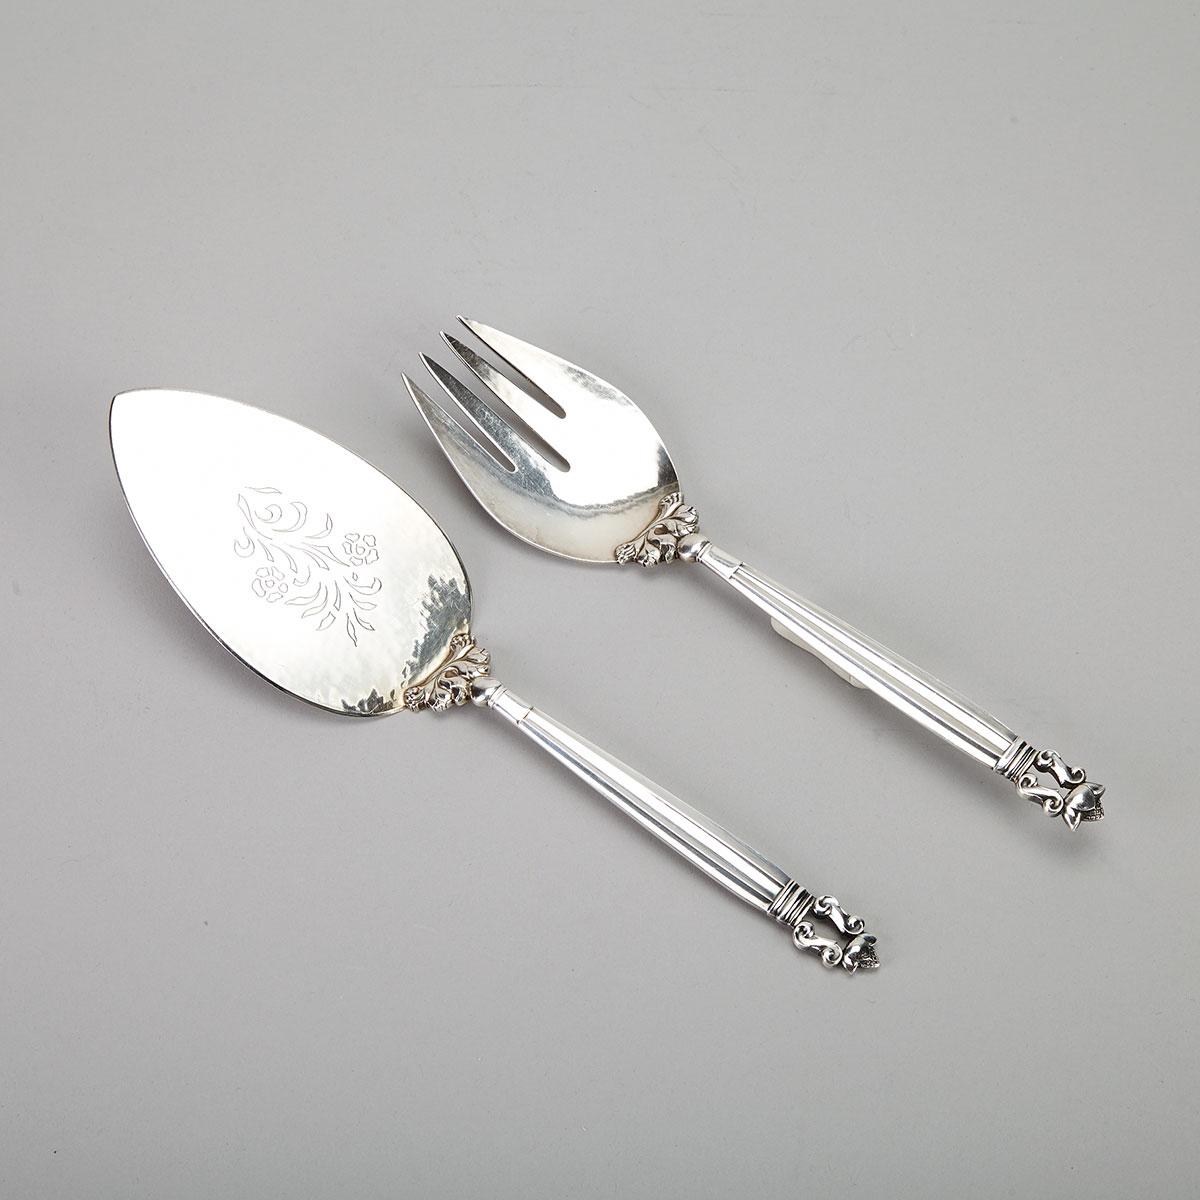 Danish Silver ‘Acorn’ Pattern Pie Server and Fork, Johan Rohde for Georg Jensen, Copenhagen, mid-20th century